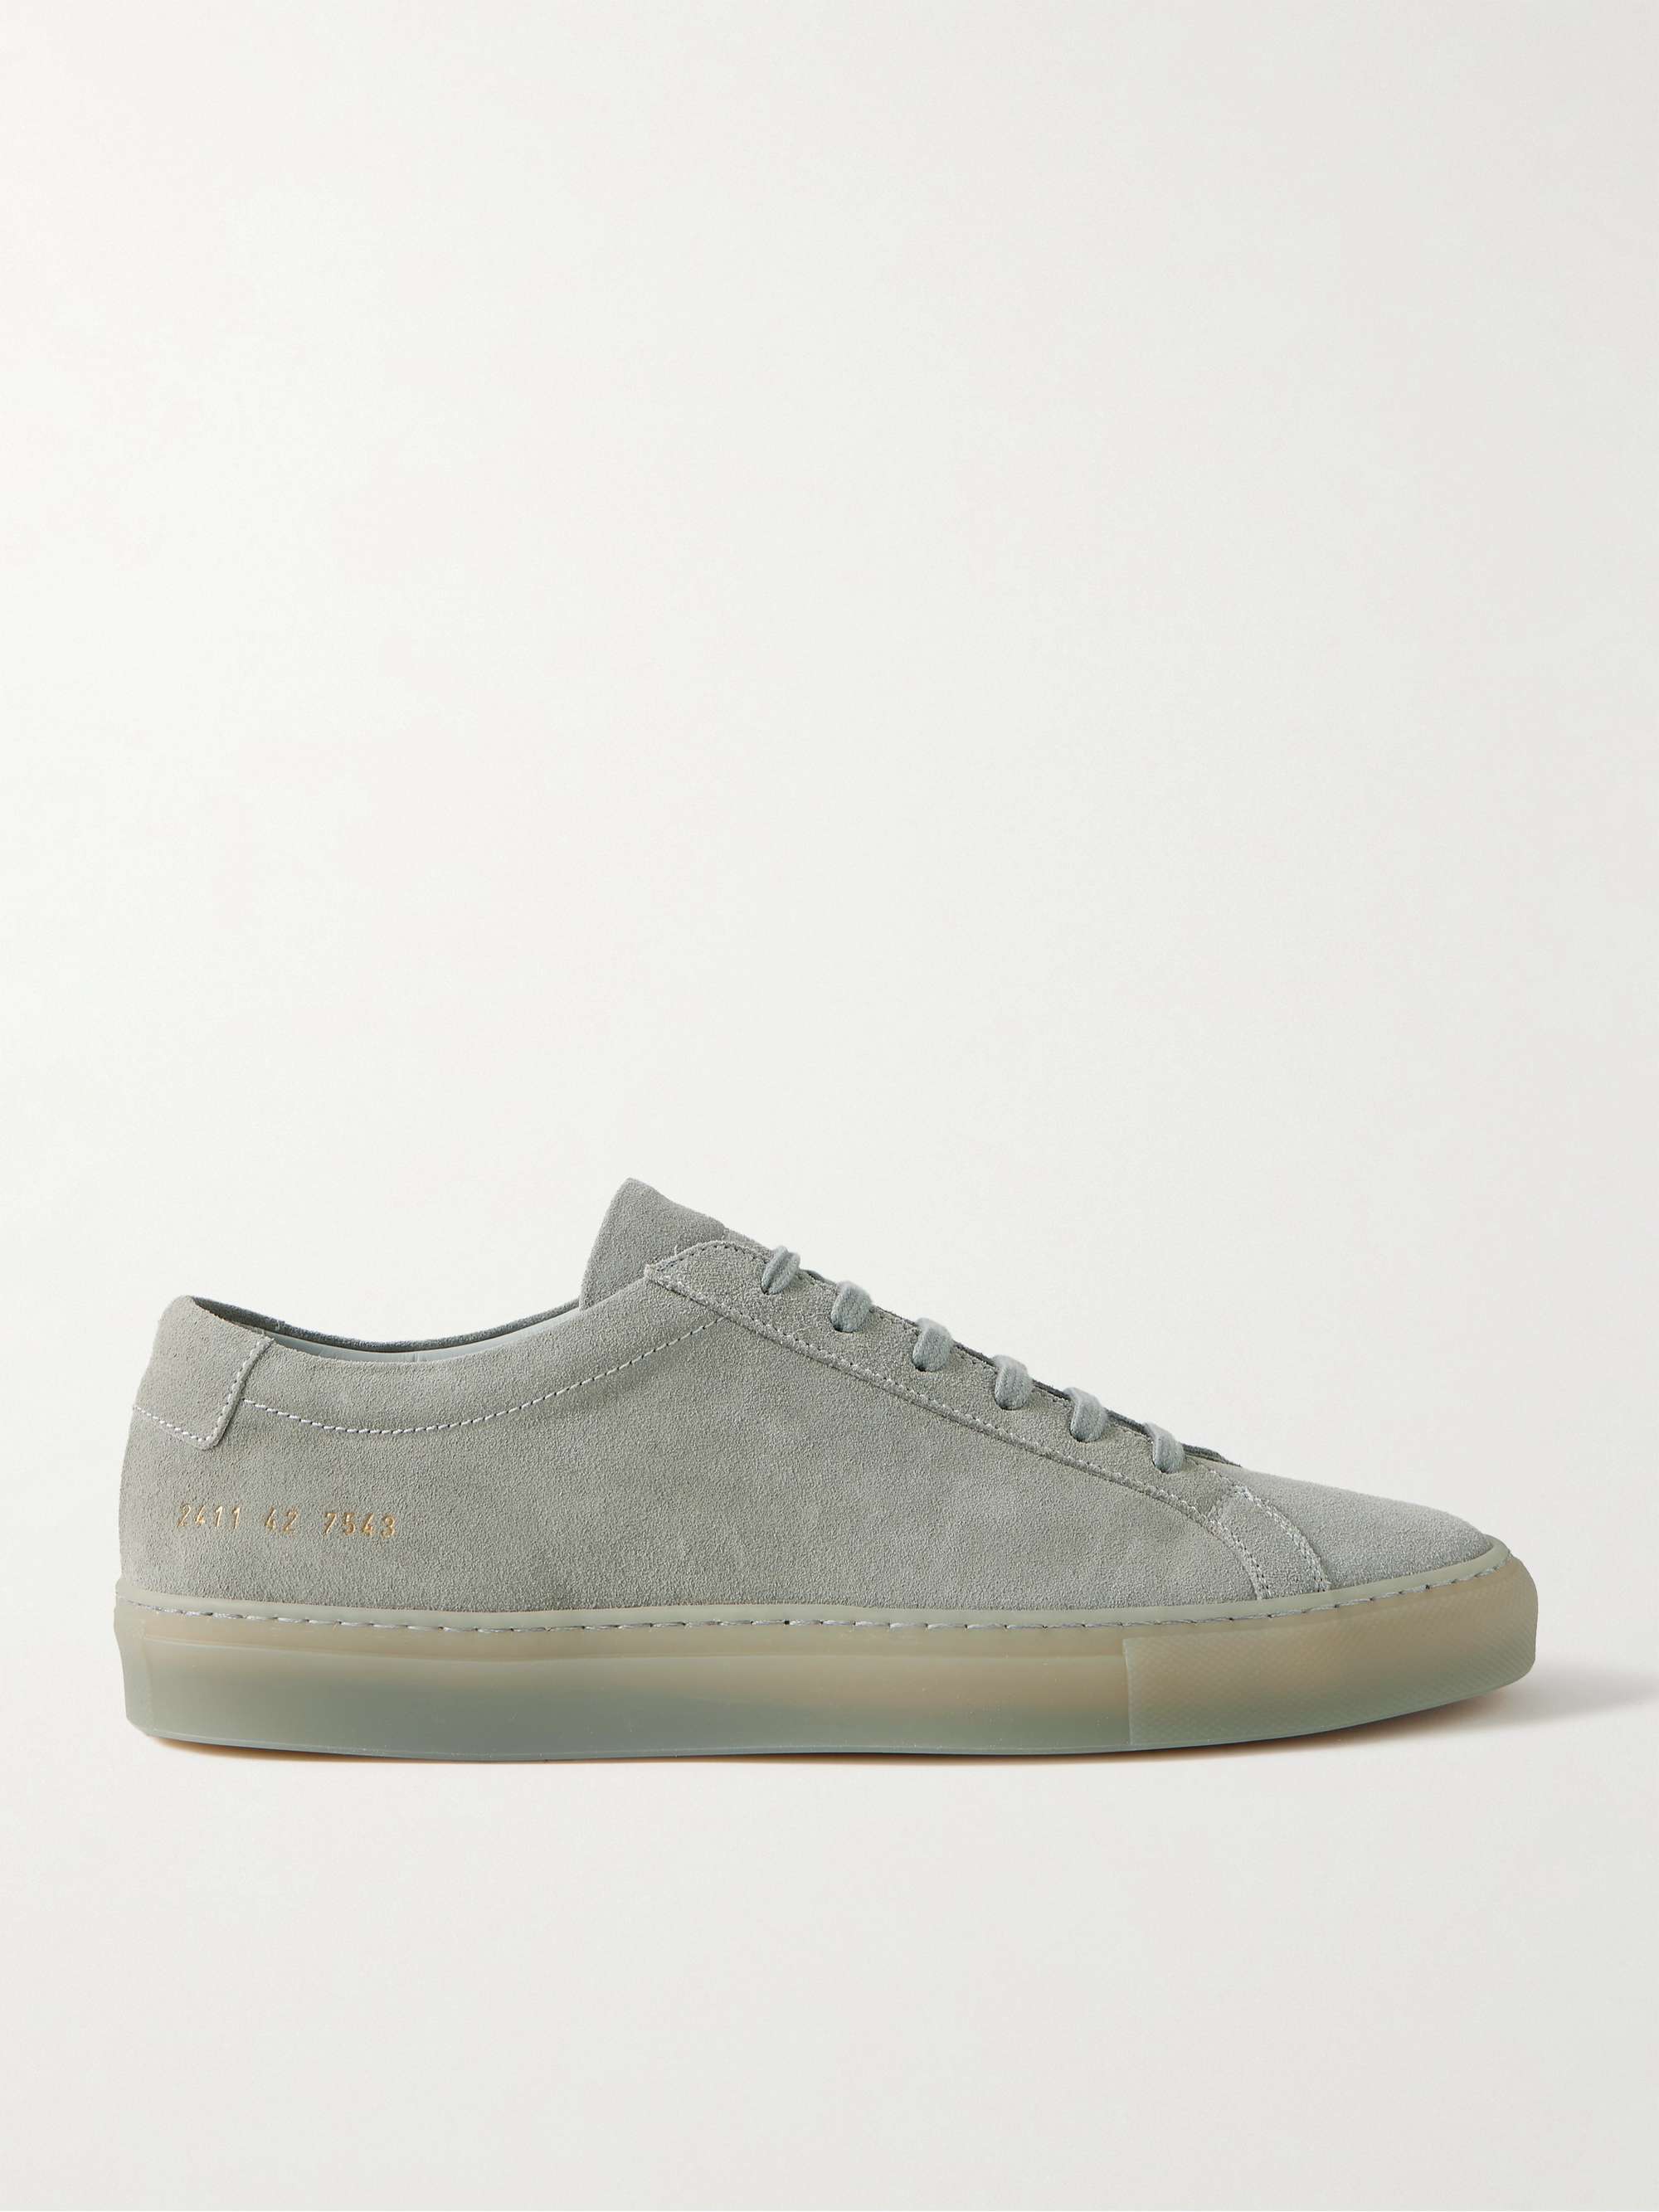 COMMON PROJECTS Original Achilles Suede Sneakers for Men | MR PORTER